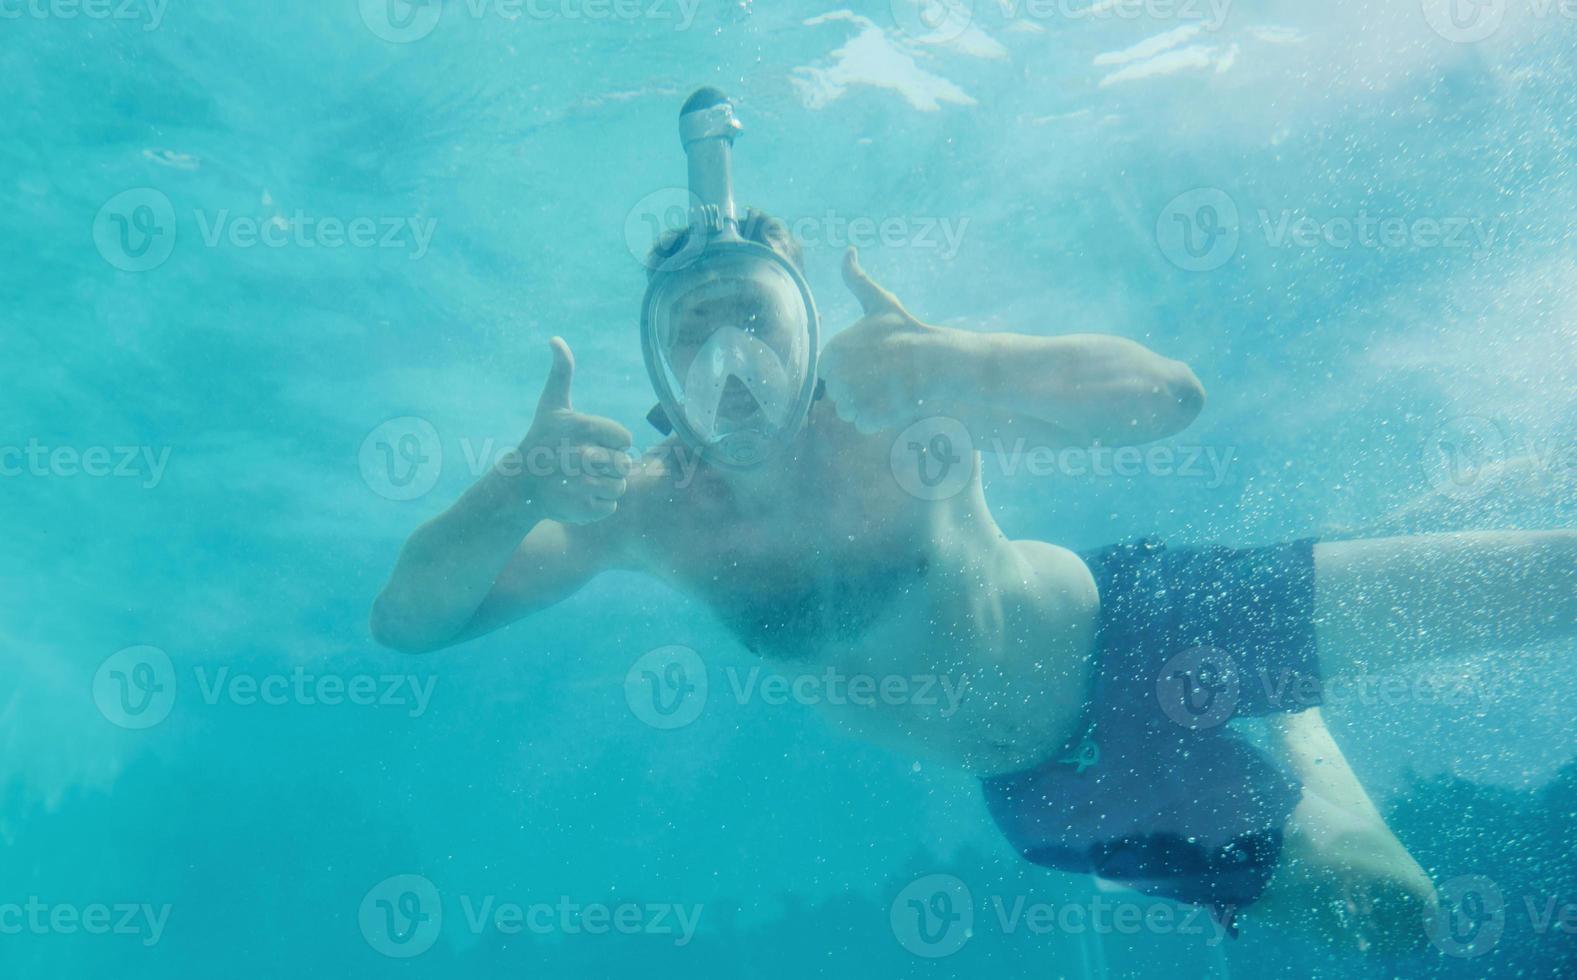 Man swimming underwater in the pool at daytime. Having fun photo